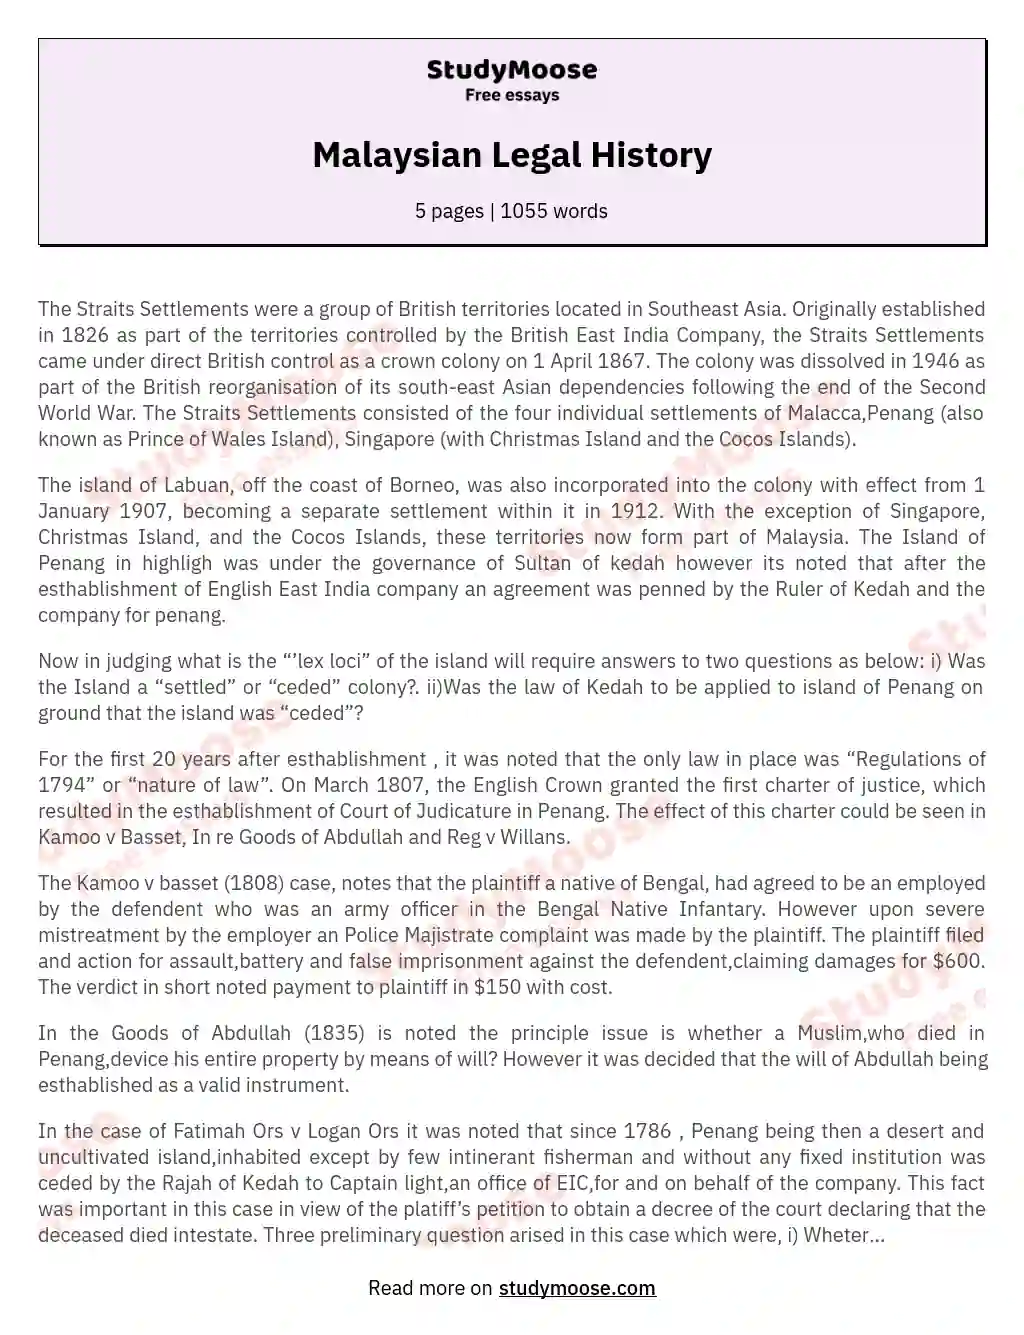 Malaysian Legal History essay